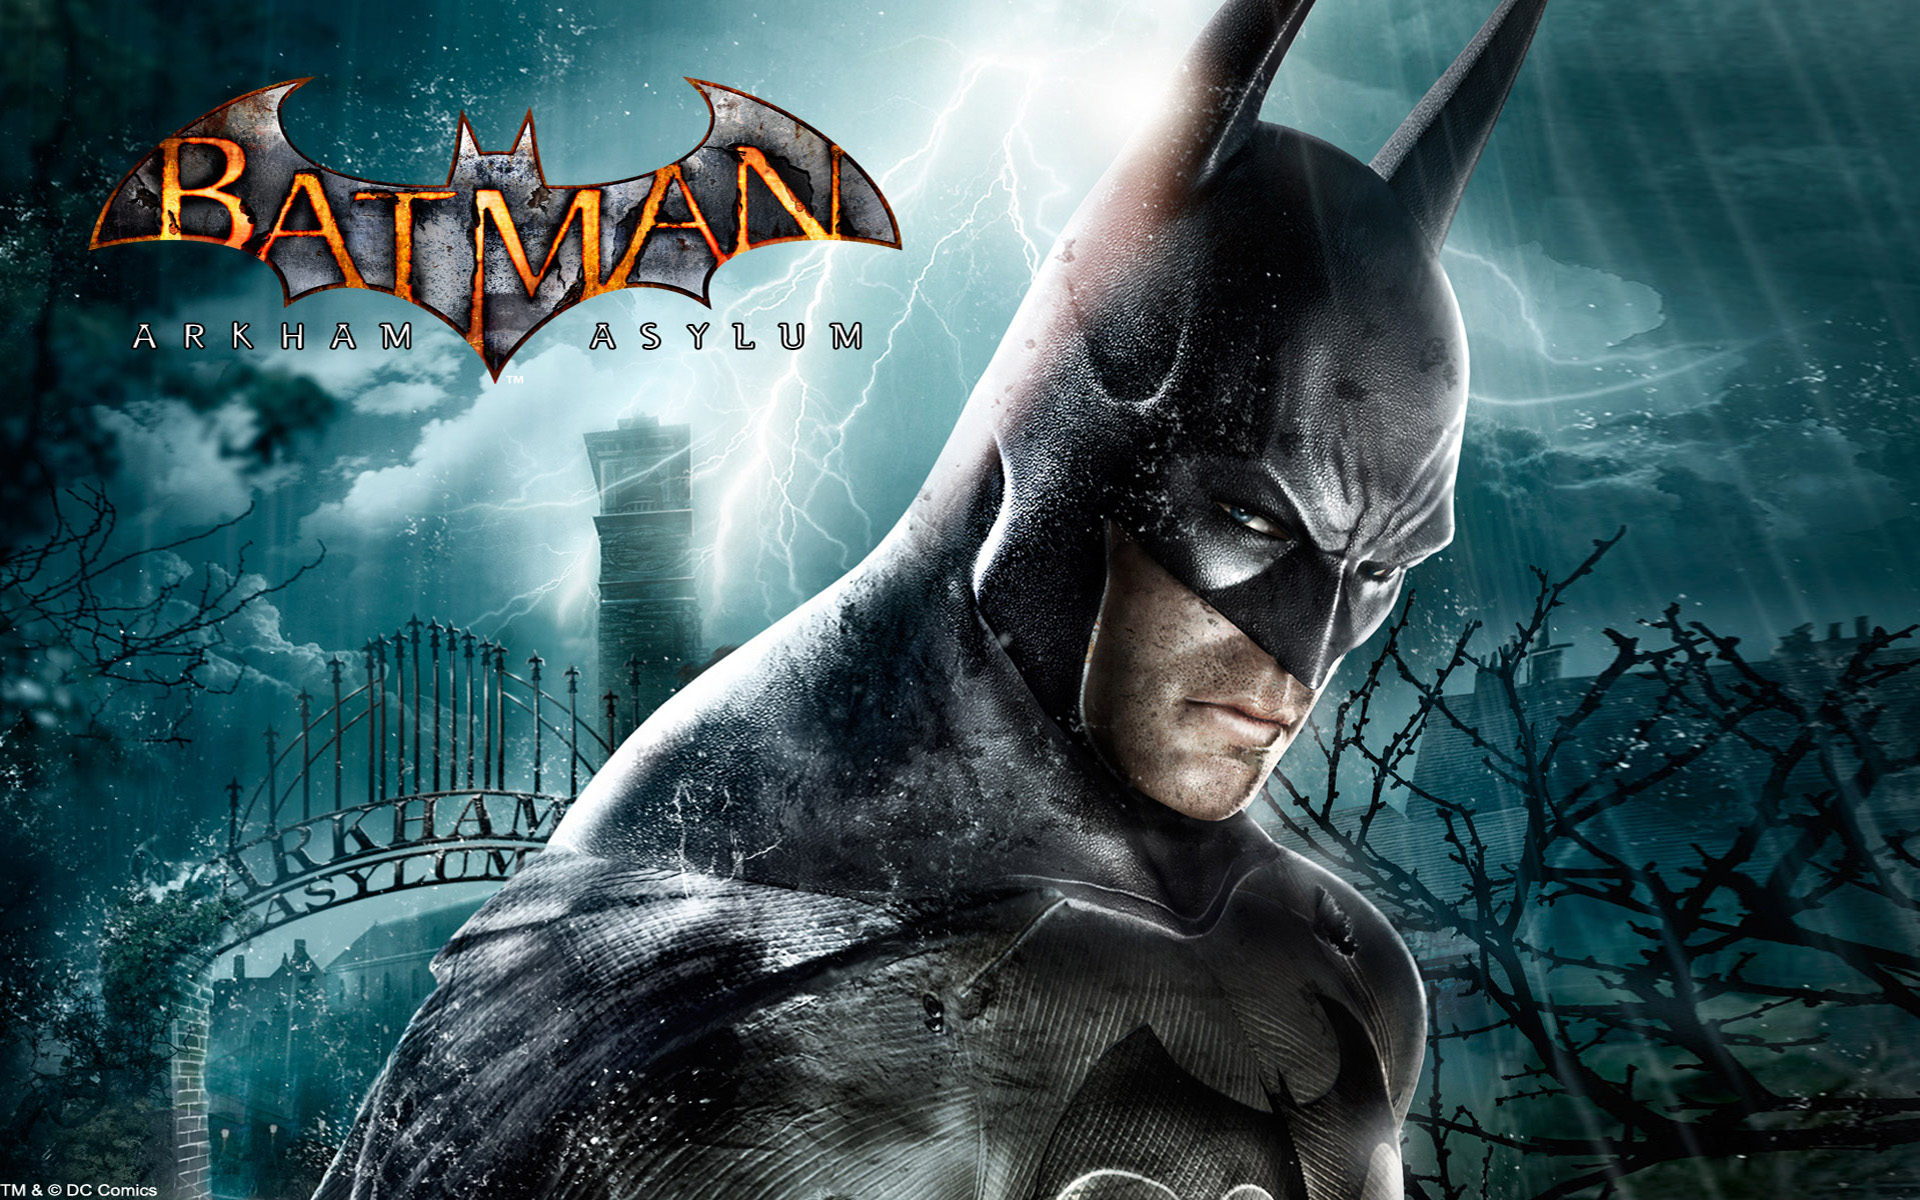 Batman Arkham Asylum Video Games Desktop Wallpaper Hd For Mobile Phones And  Laptops 1920x1200 